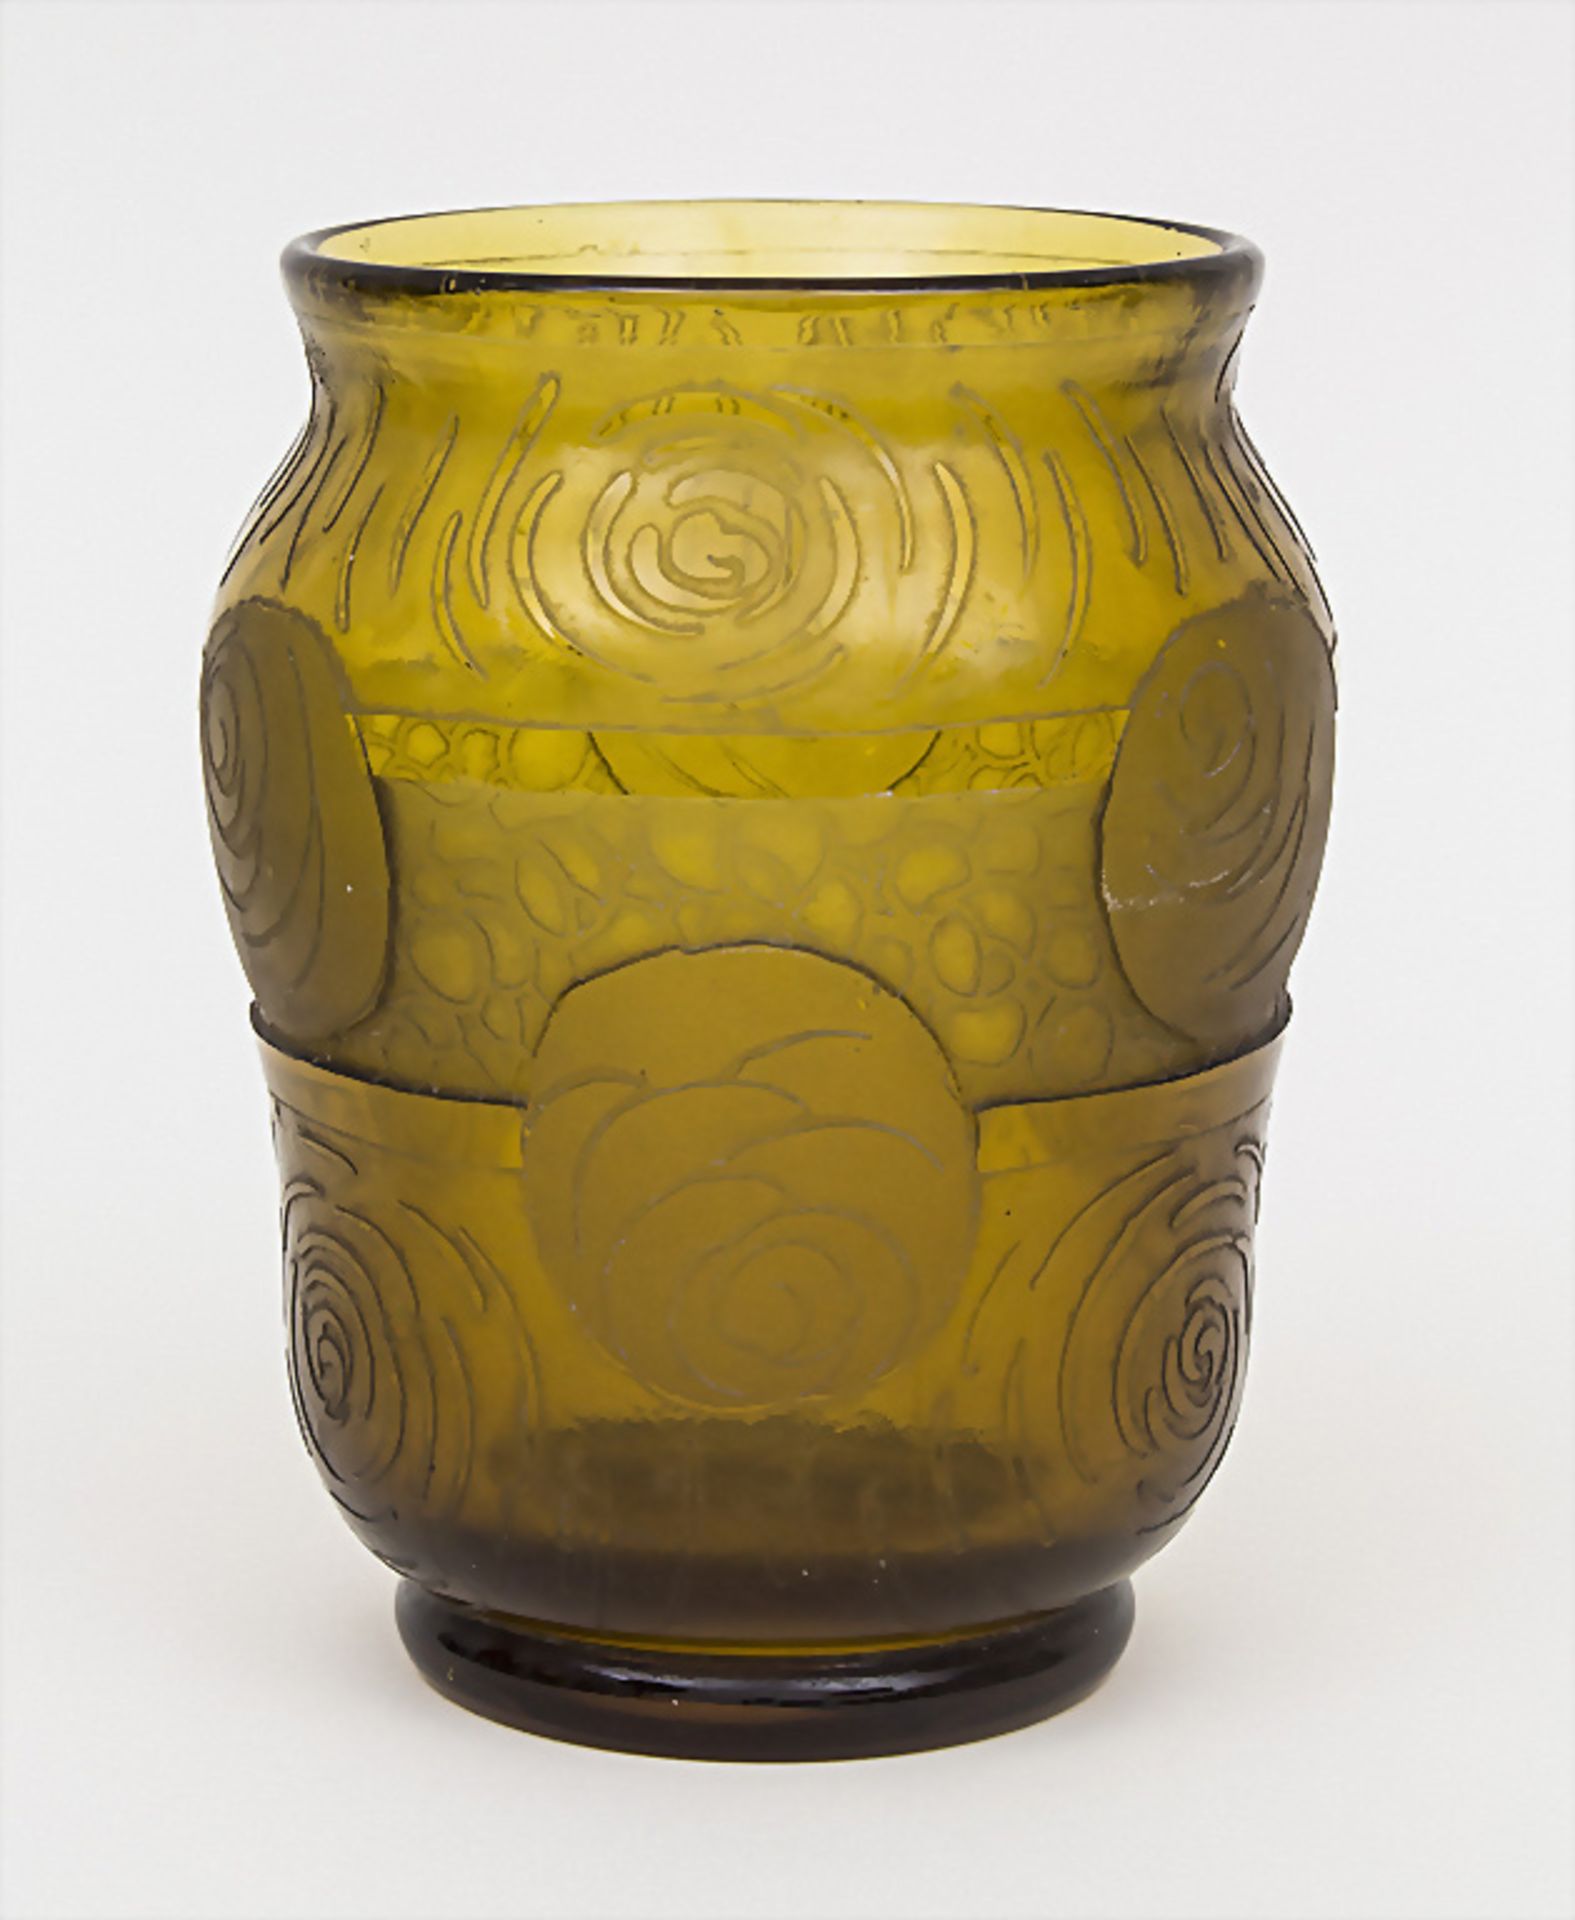 Art Déco Vase / An Art Déco vase, Montjoye, Légras, 1920er Jahre - Bild 2 aus 3